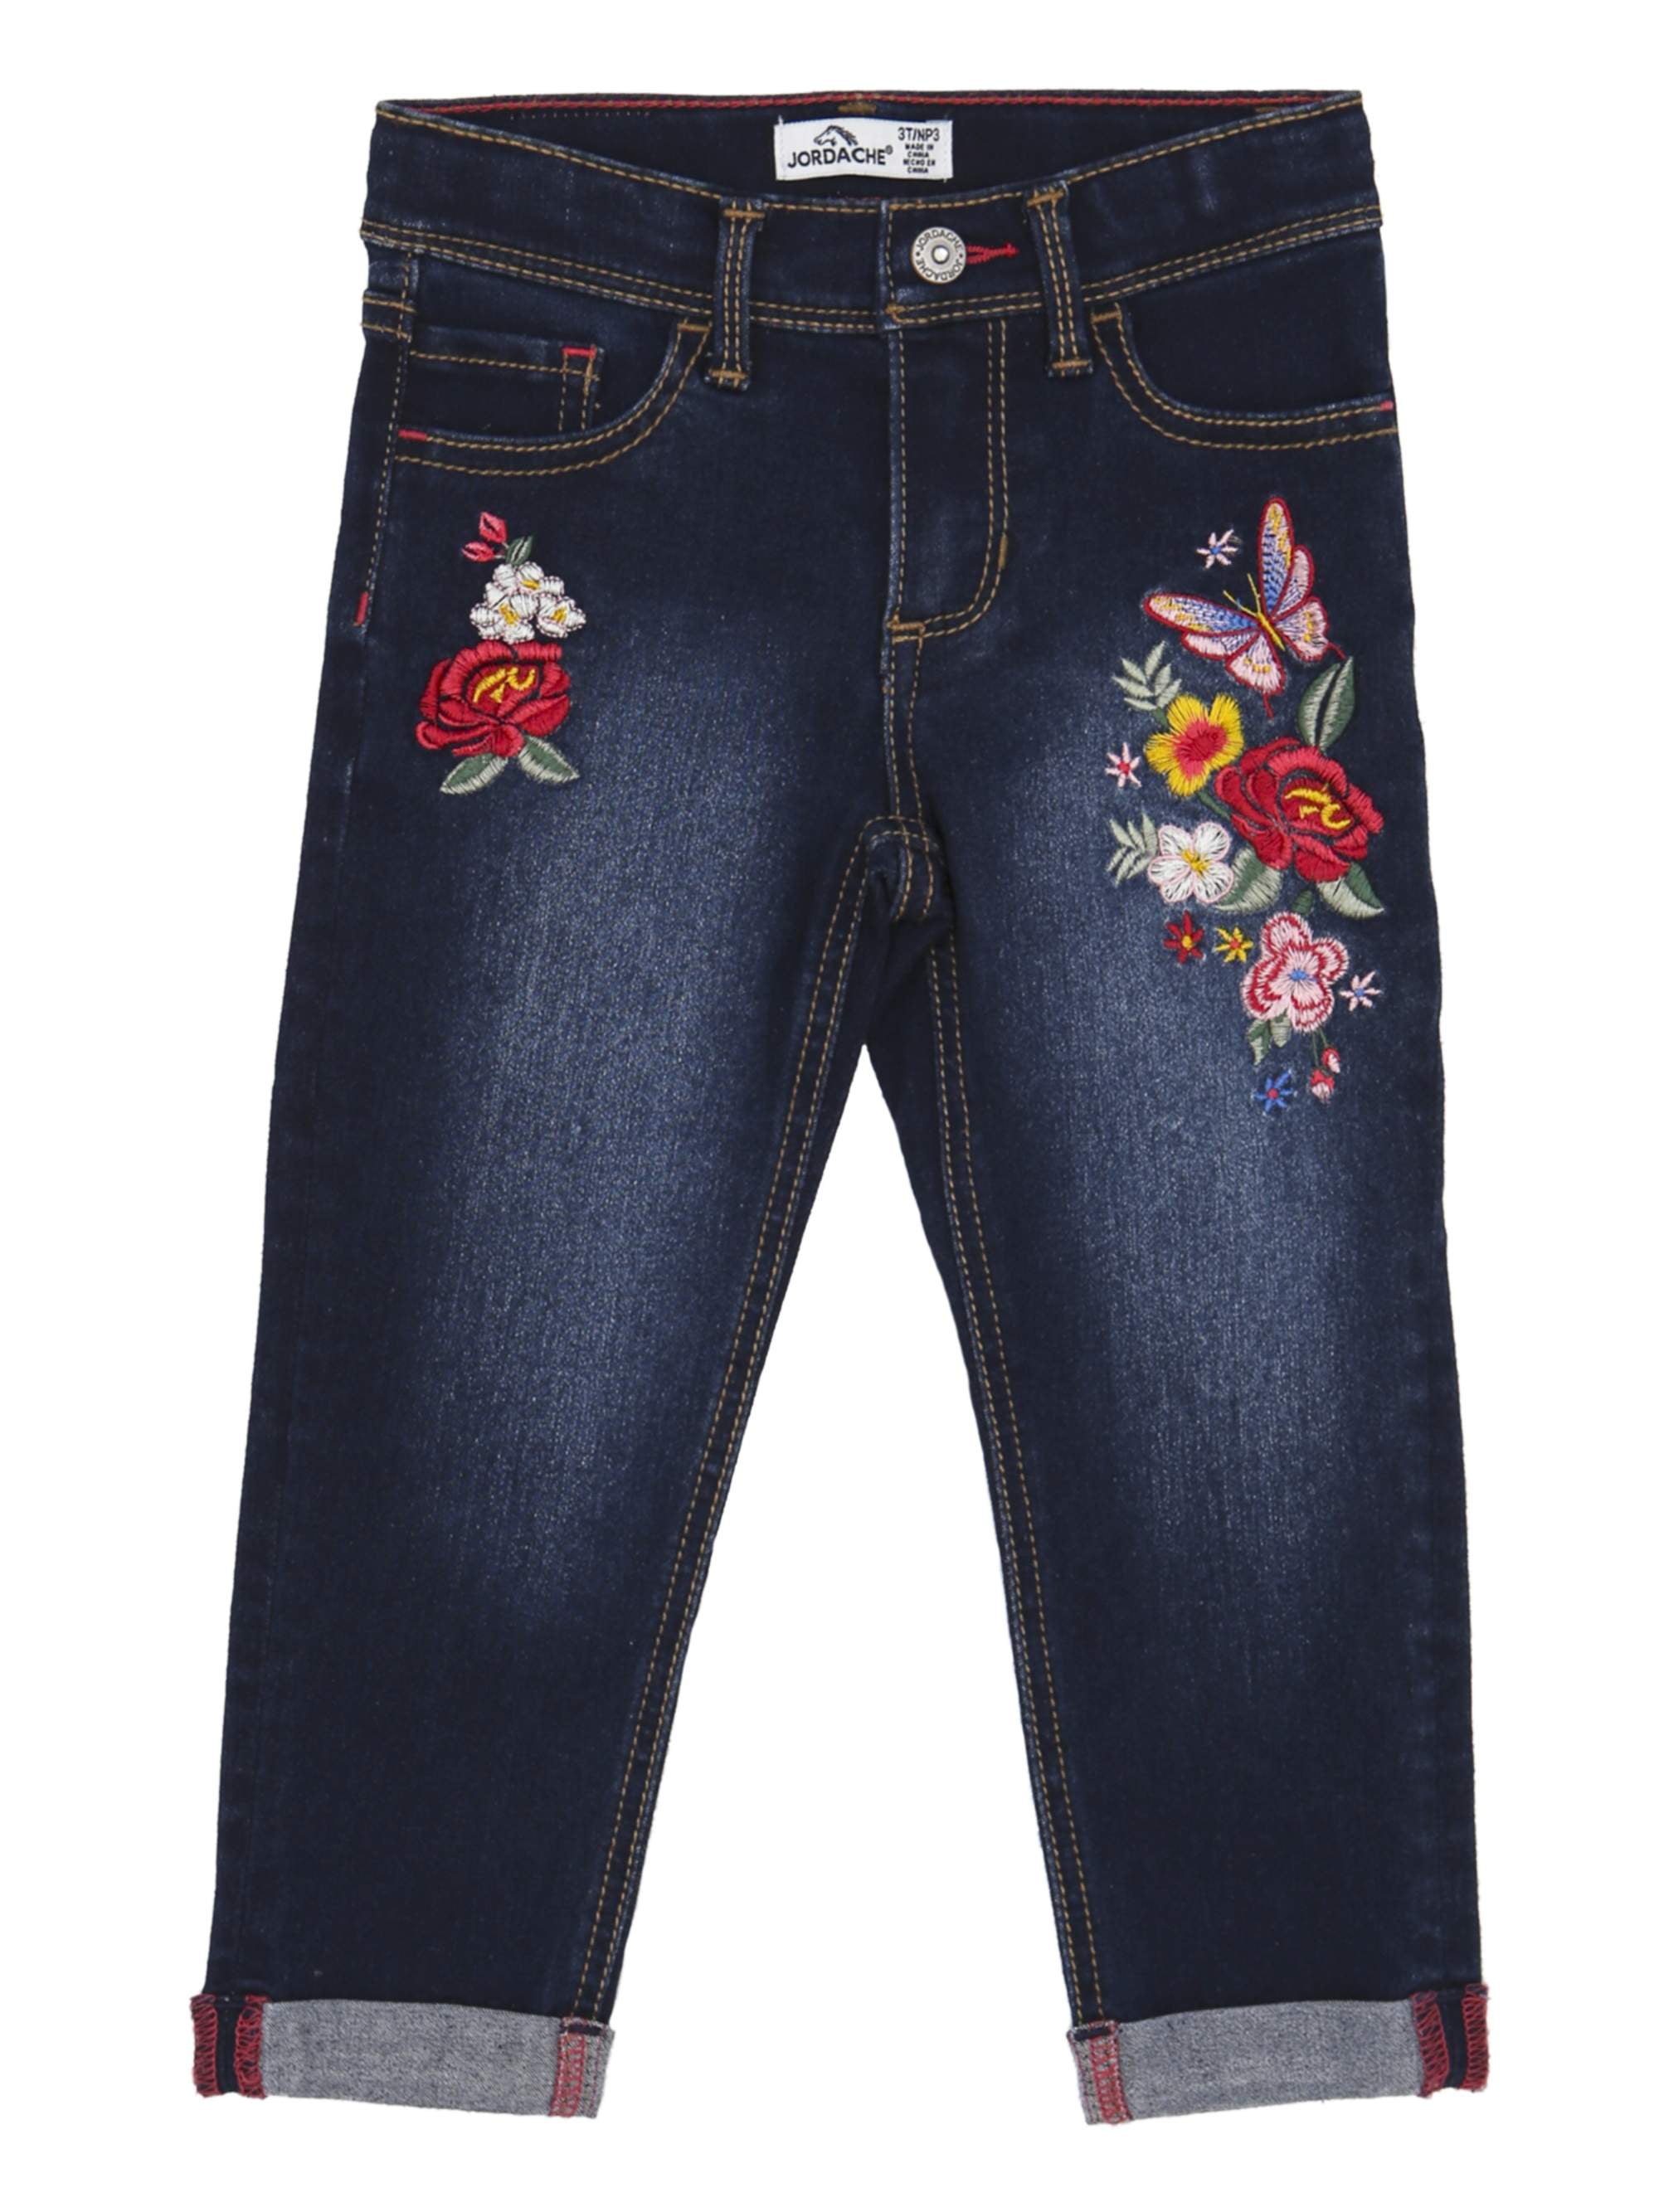 Floral Embroidery Roll Cuff Boyfriend Jeans (Toddler Girls) - Walmart.com